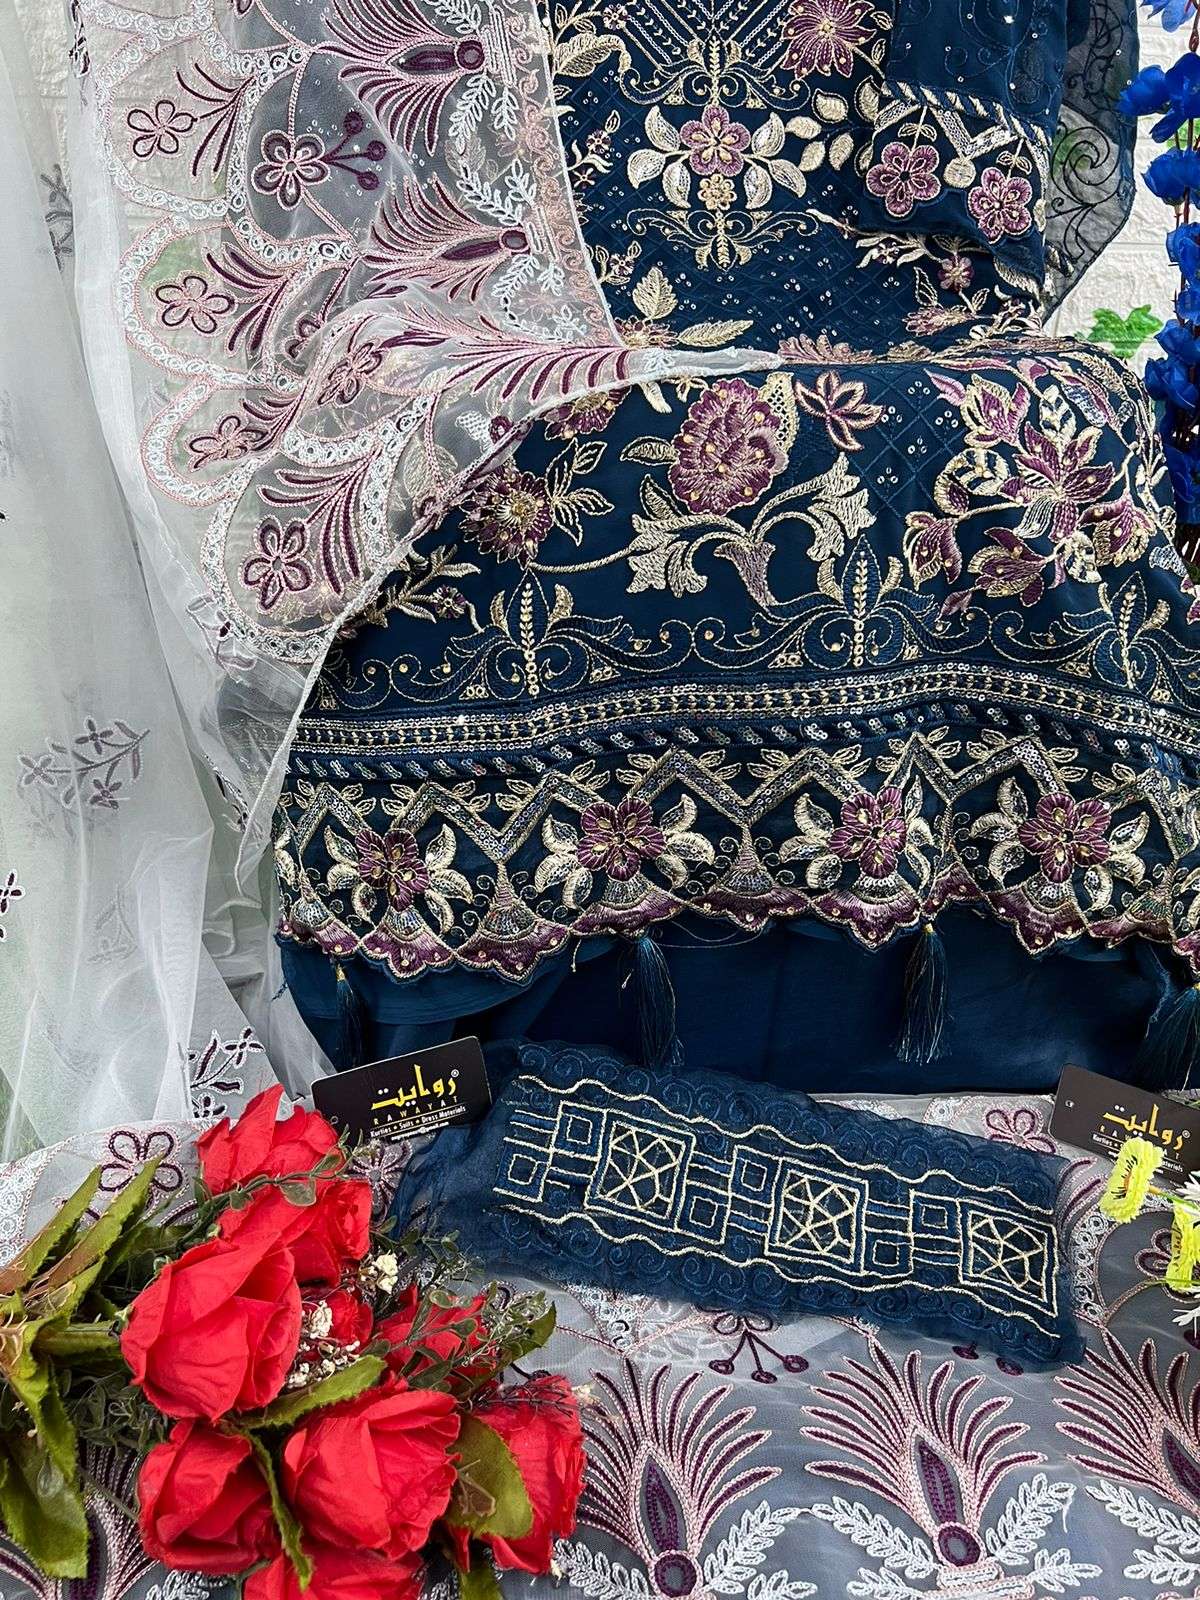 rawayat ramsha vol-25 designer wedding pakistani salwar kameez wholesaler surat gujarat